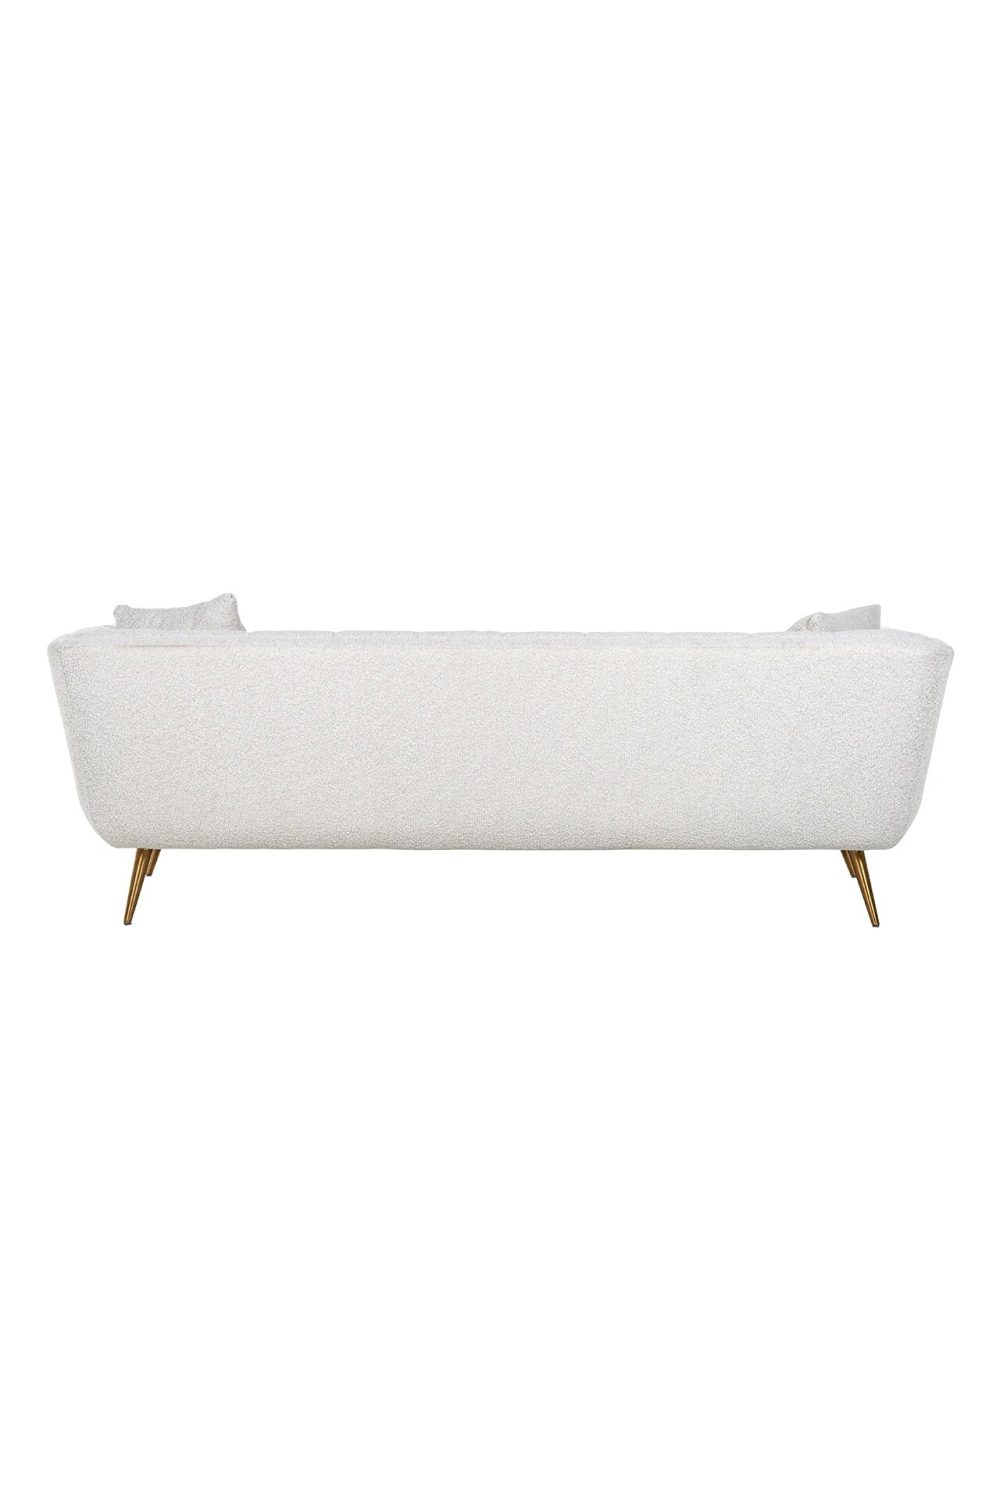 White Bouclé Channel Stitched Sofa | OROA Huxley | OROA.com